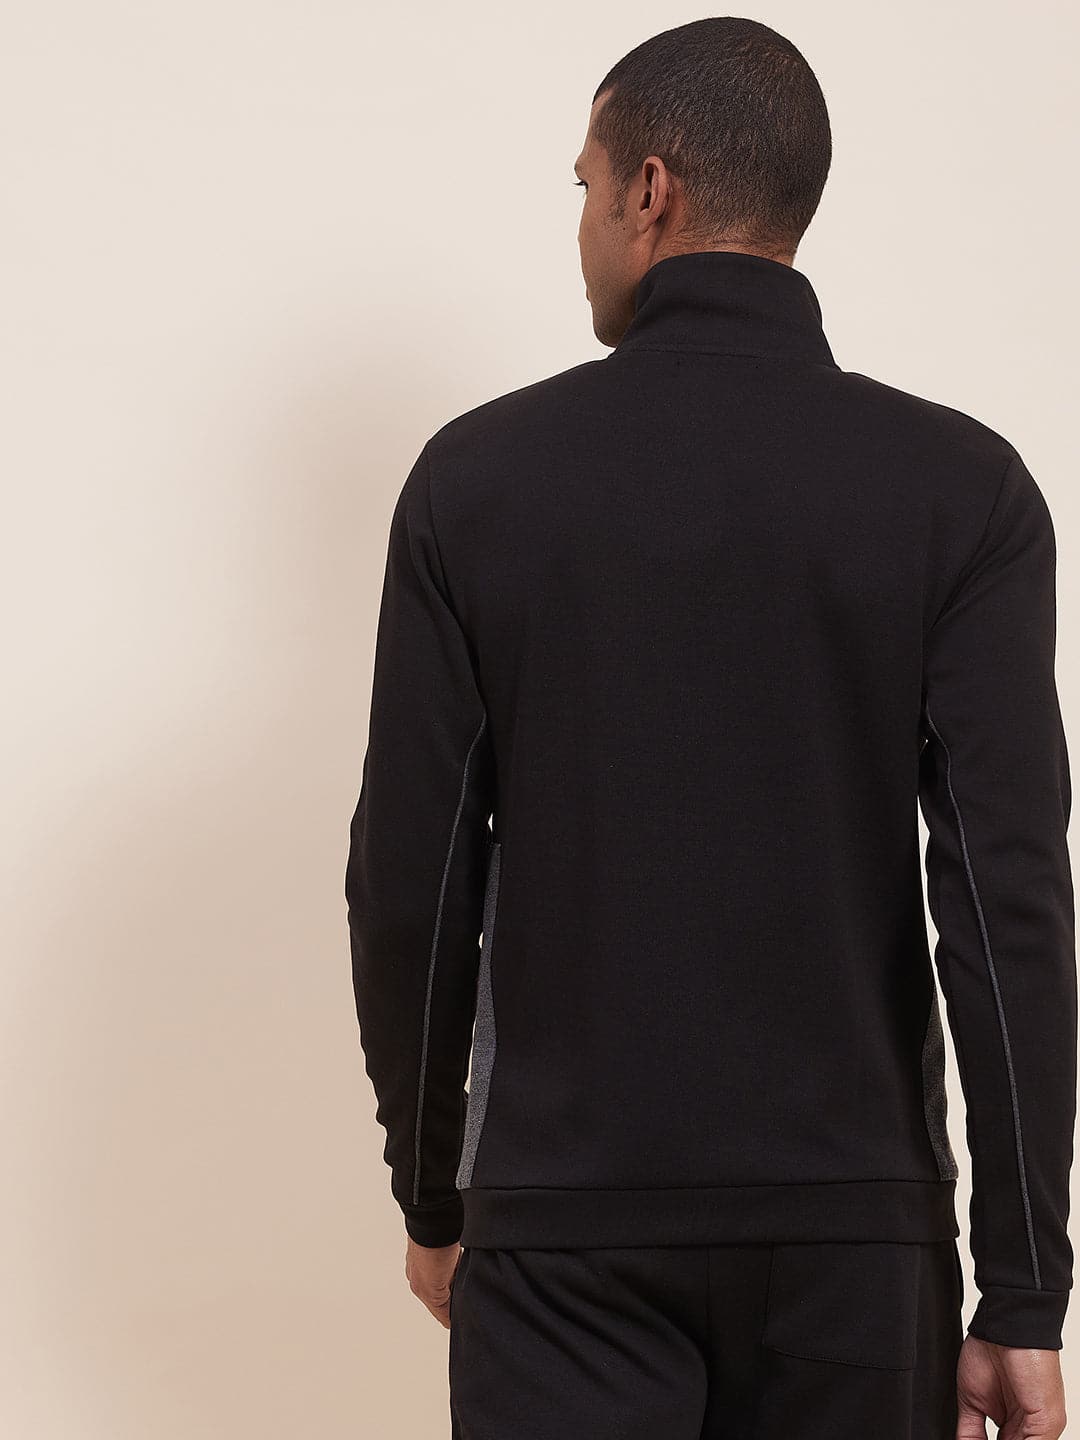 Men's Black High Neck Contrast Flap Jacket - LYUSH-MASCLN